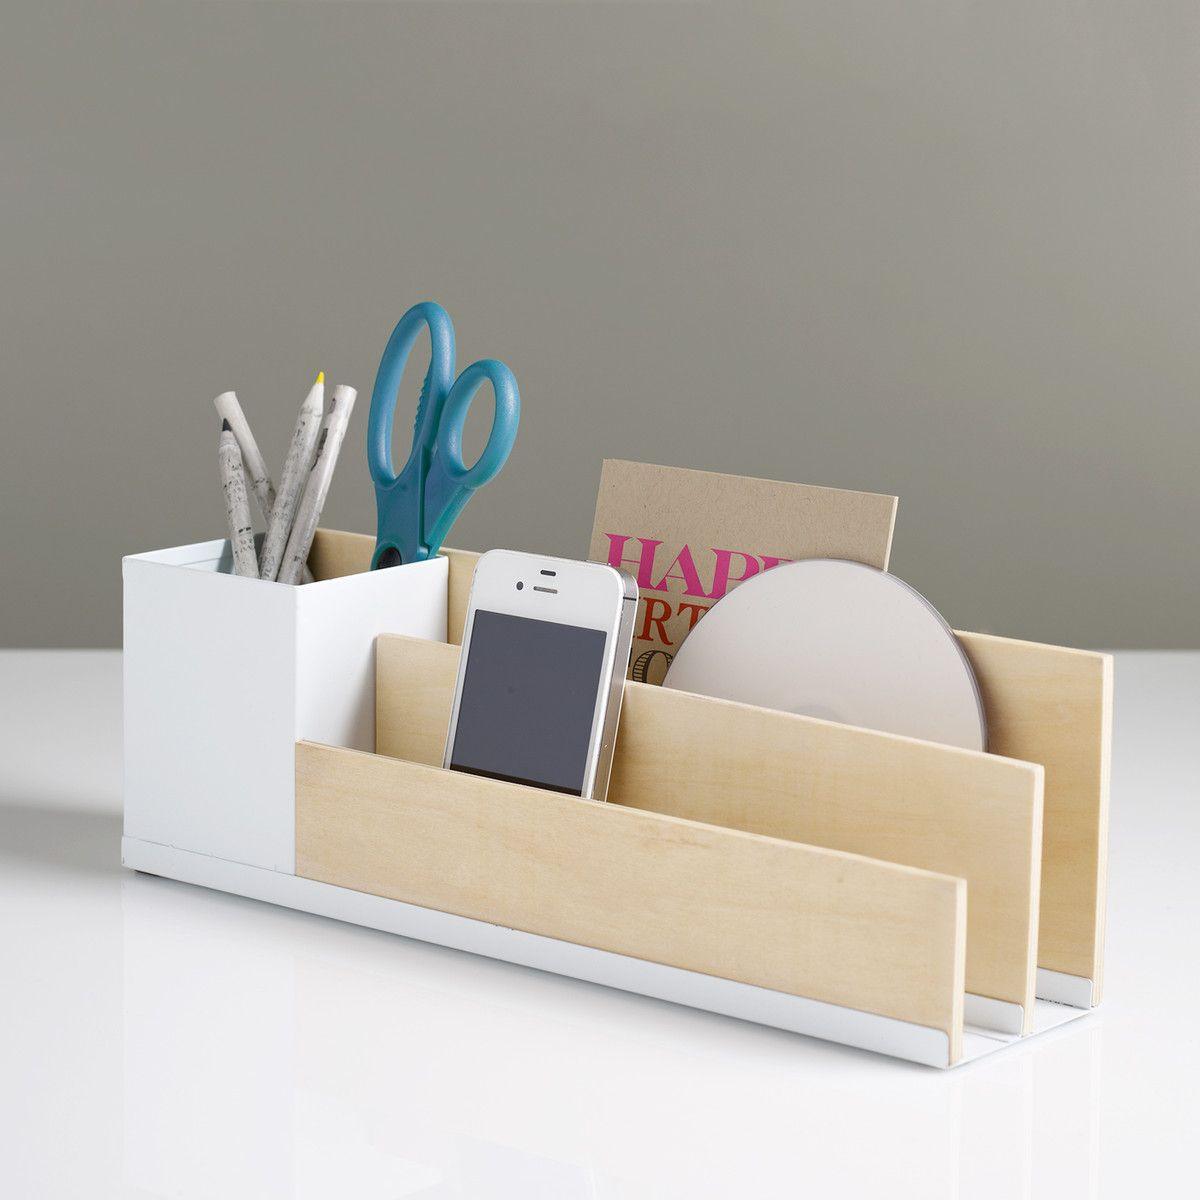 Best ideas about Desk Organization DIY
. Save or Pin DIY inspiration Desk Organizer use balsa wood or Now.